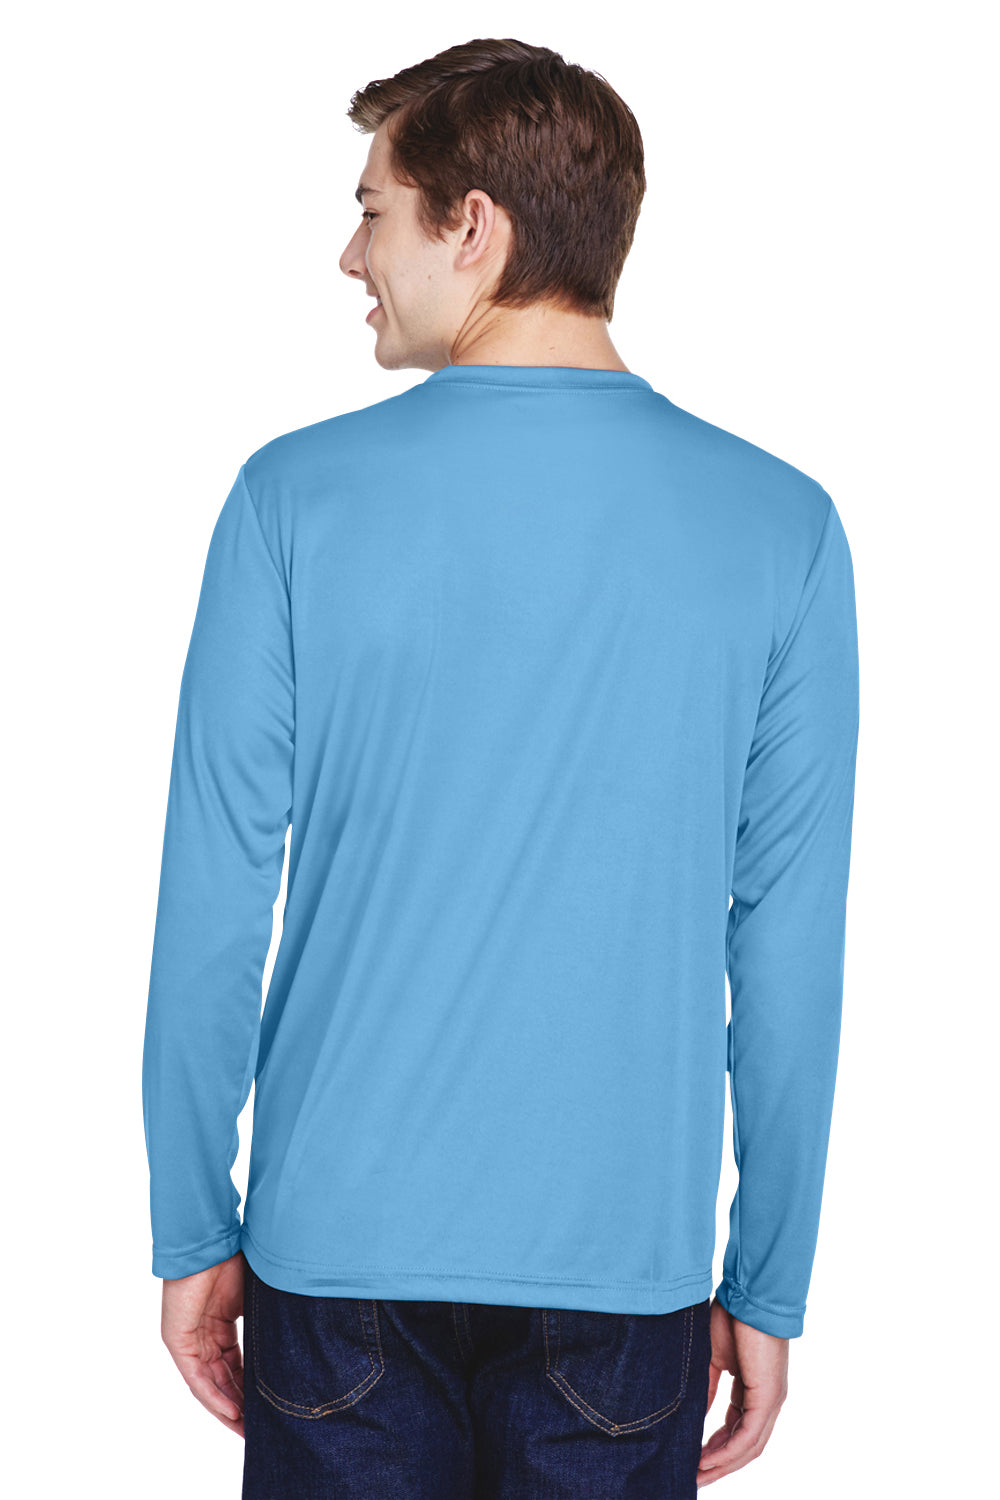 Team 365 TT11L Mens Zone Performance Moisture Wicking Long Sleeve Crewneck T-Shirt Light Blue Back